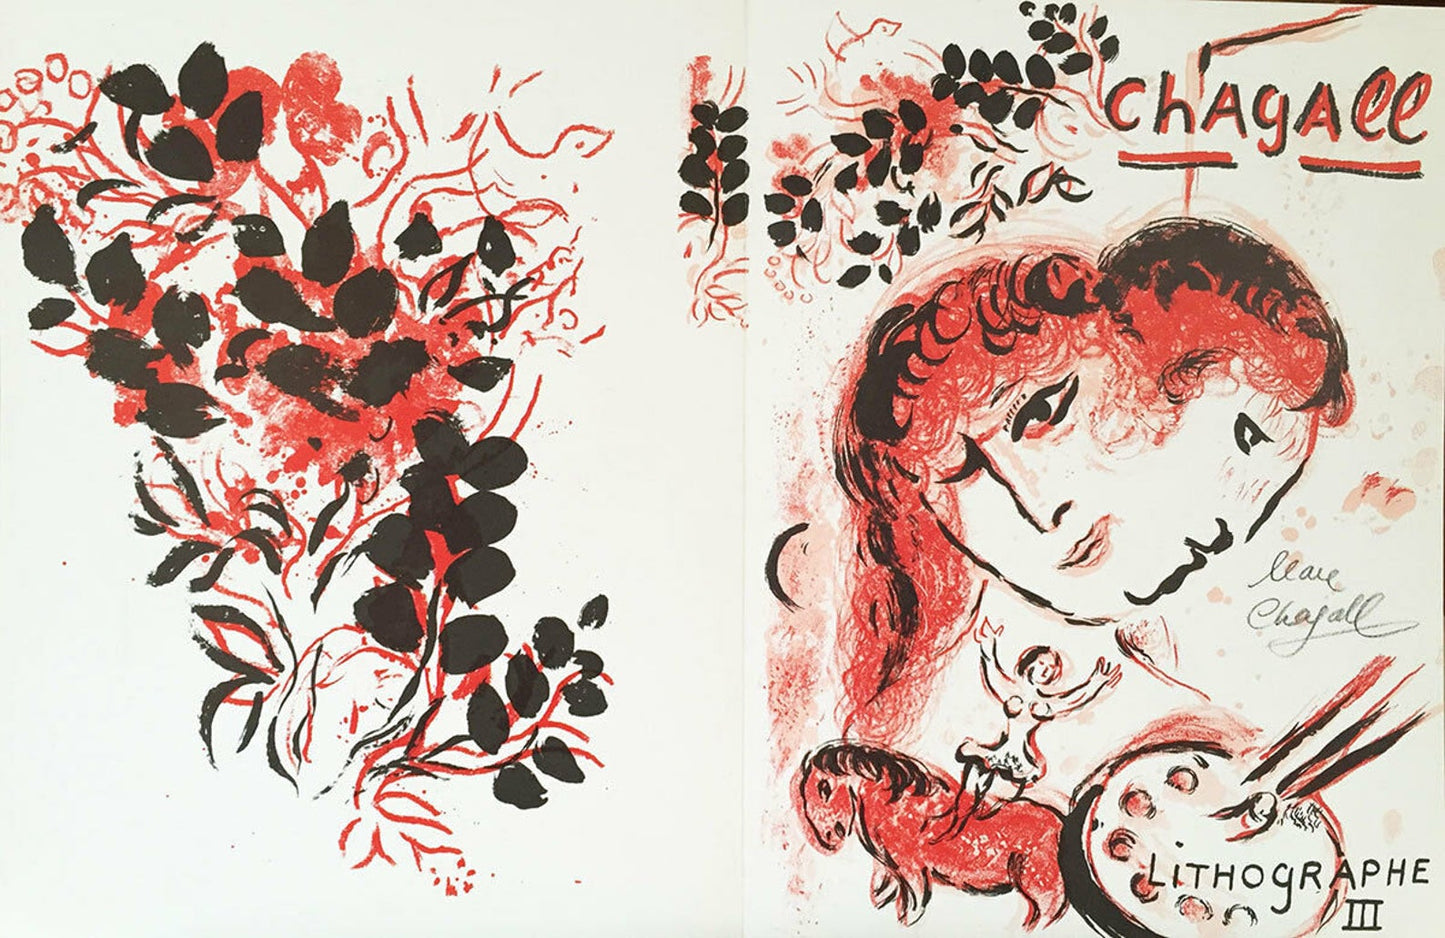 Marc Chagall Lithograph III: 1969 Marc Chagall Original Lithograph Cover for Book Lithograph III